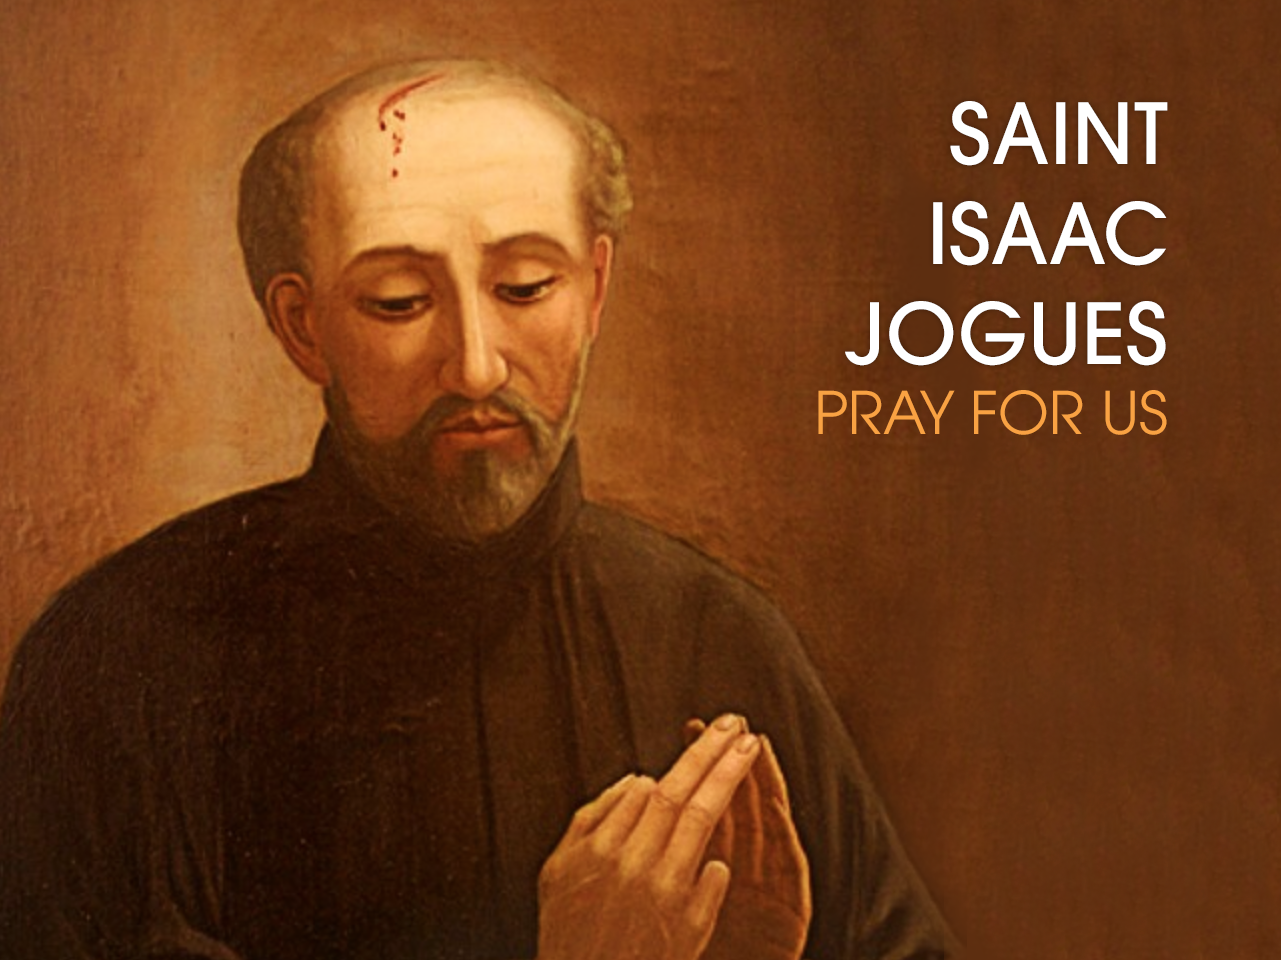 St. Isaac Jogues